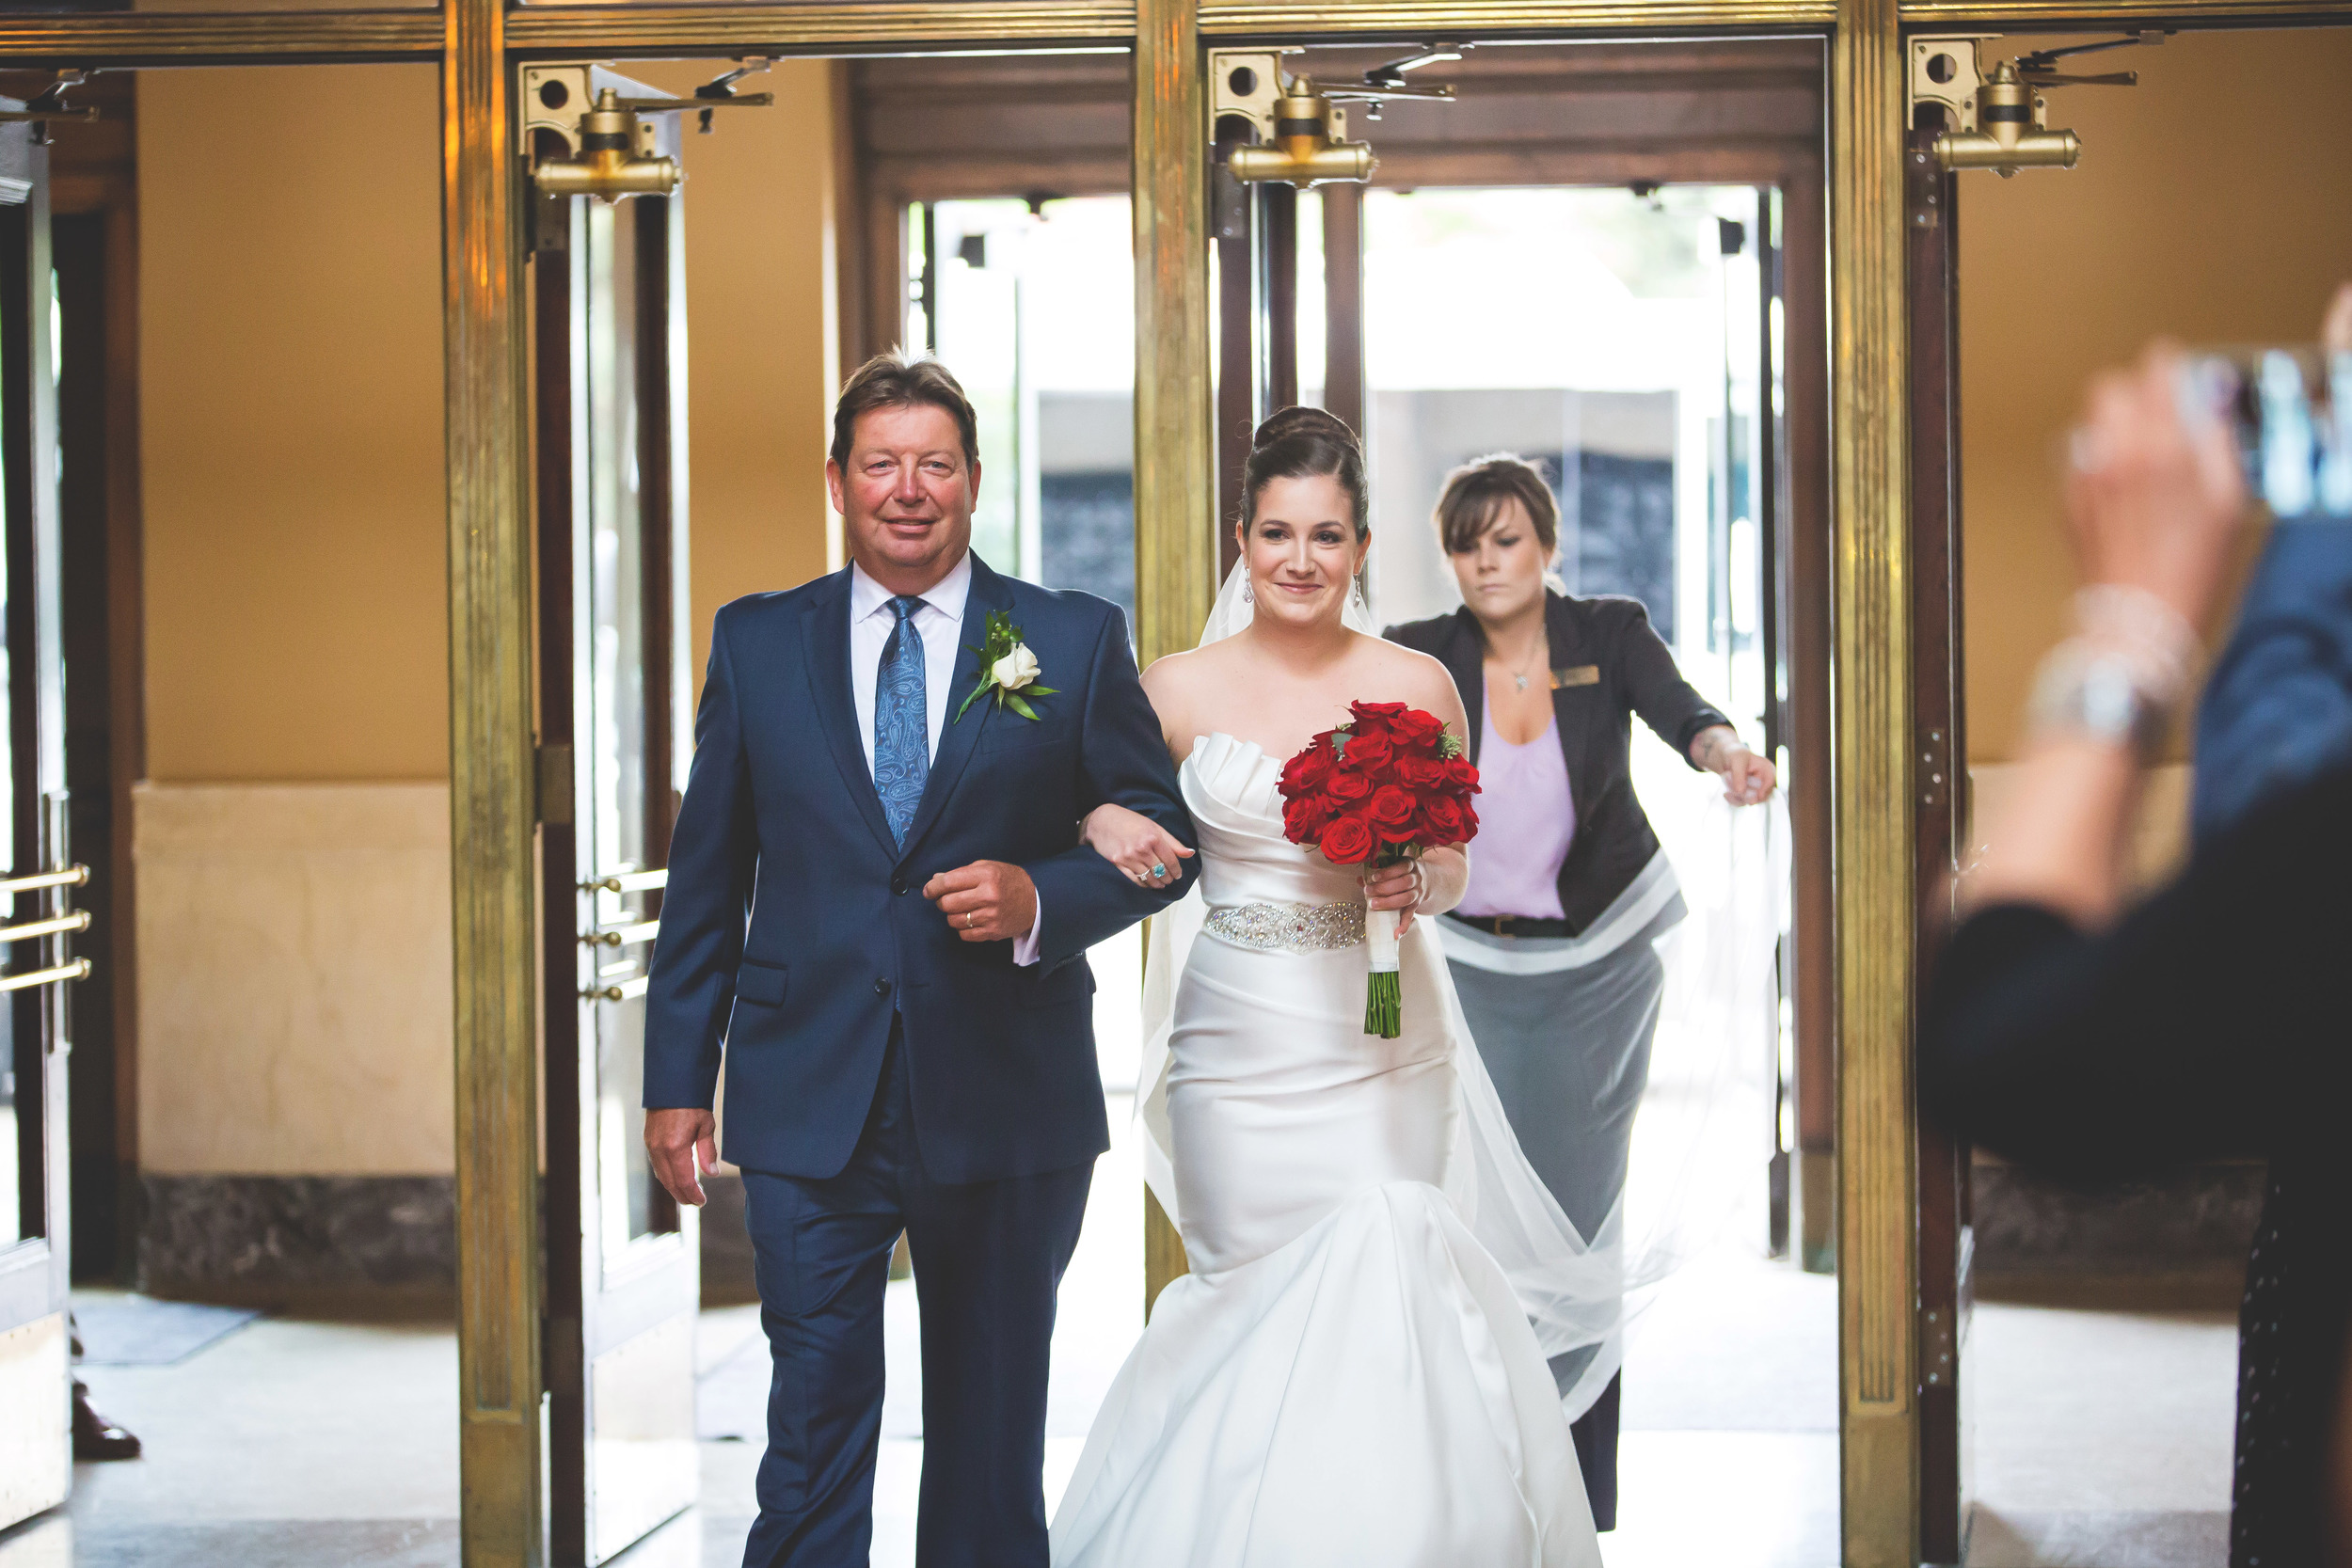 Wedding-Photography-Hamilton-Liuna-Station-Photographer-Burlington-Oakville-Niagara-Photographer-Moments-by-Lauren-Photo-Image-33.jpg